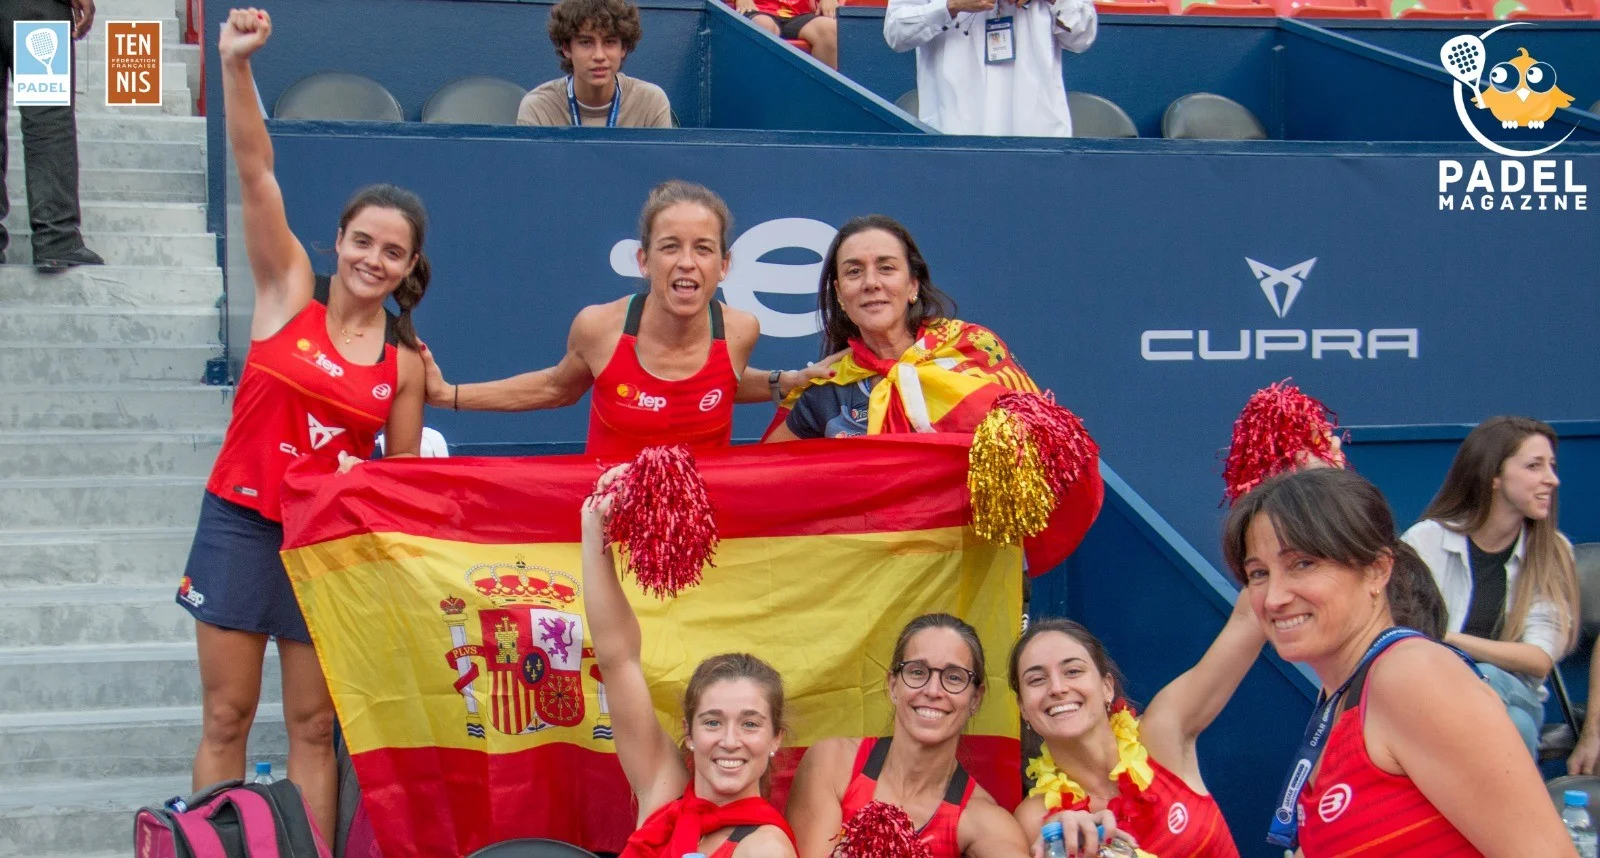 Le padel "Äta" tennis i Spanien